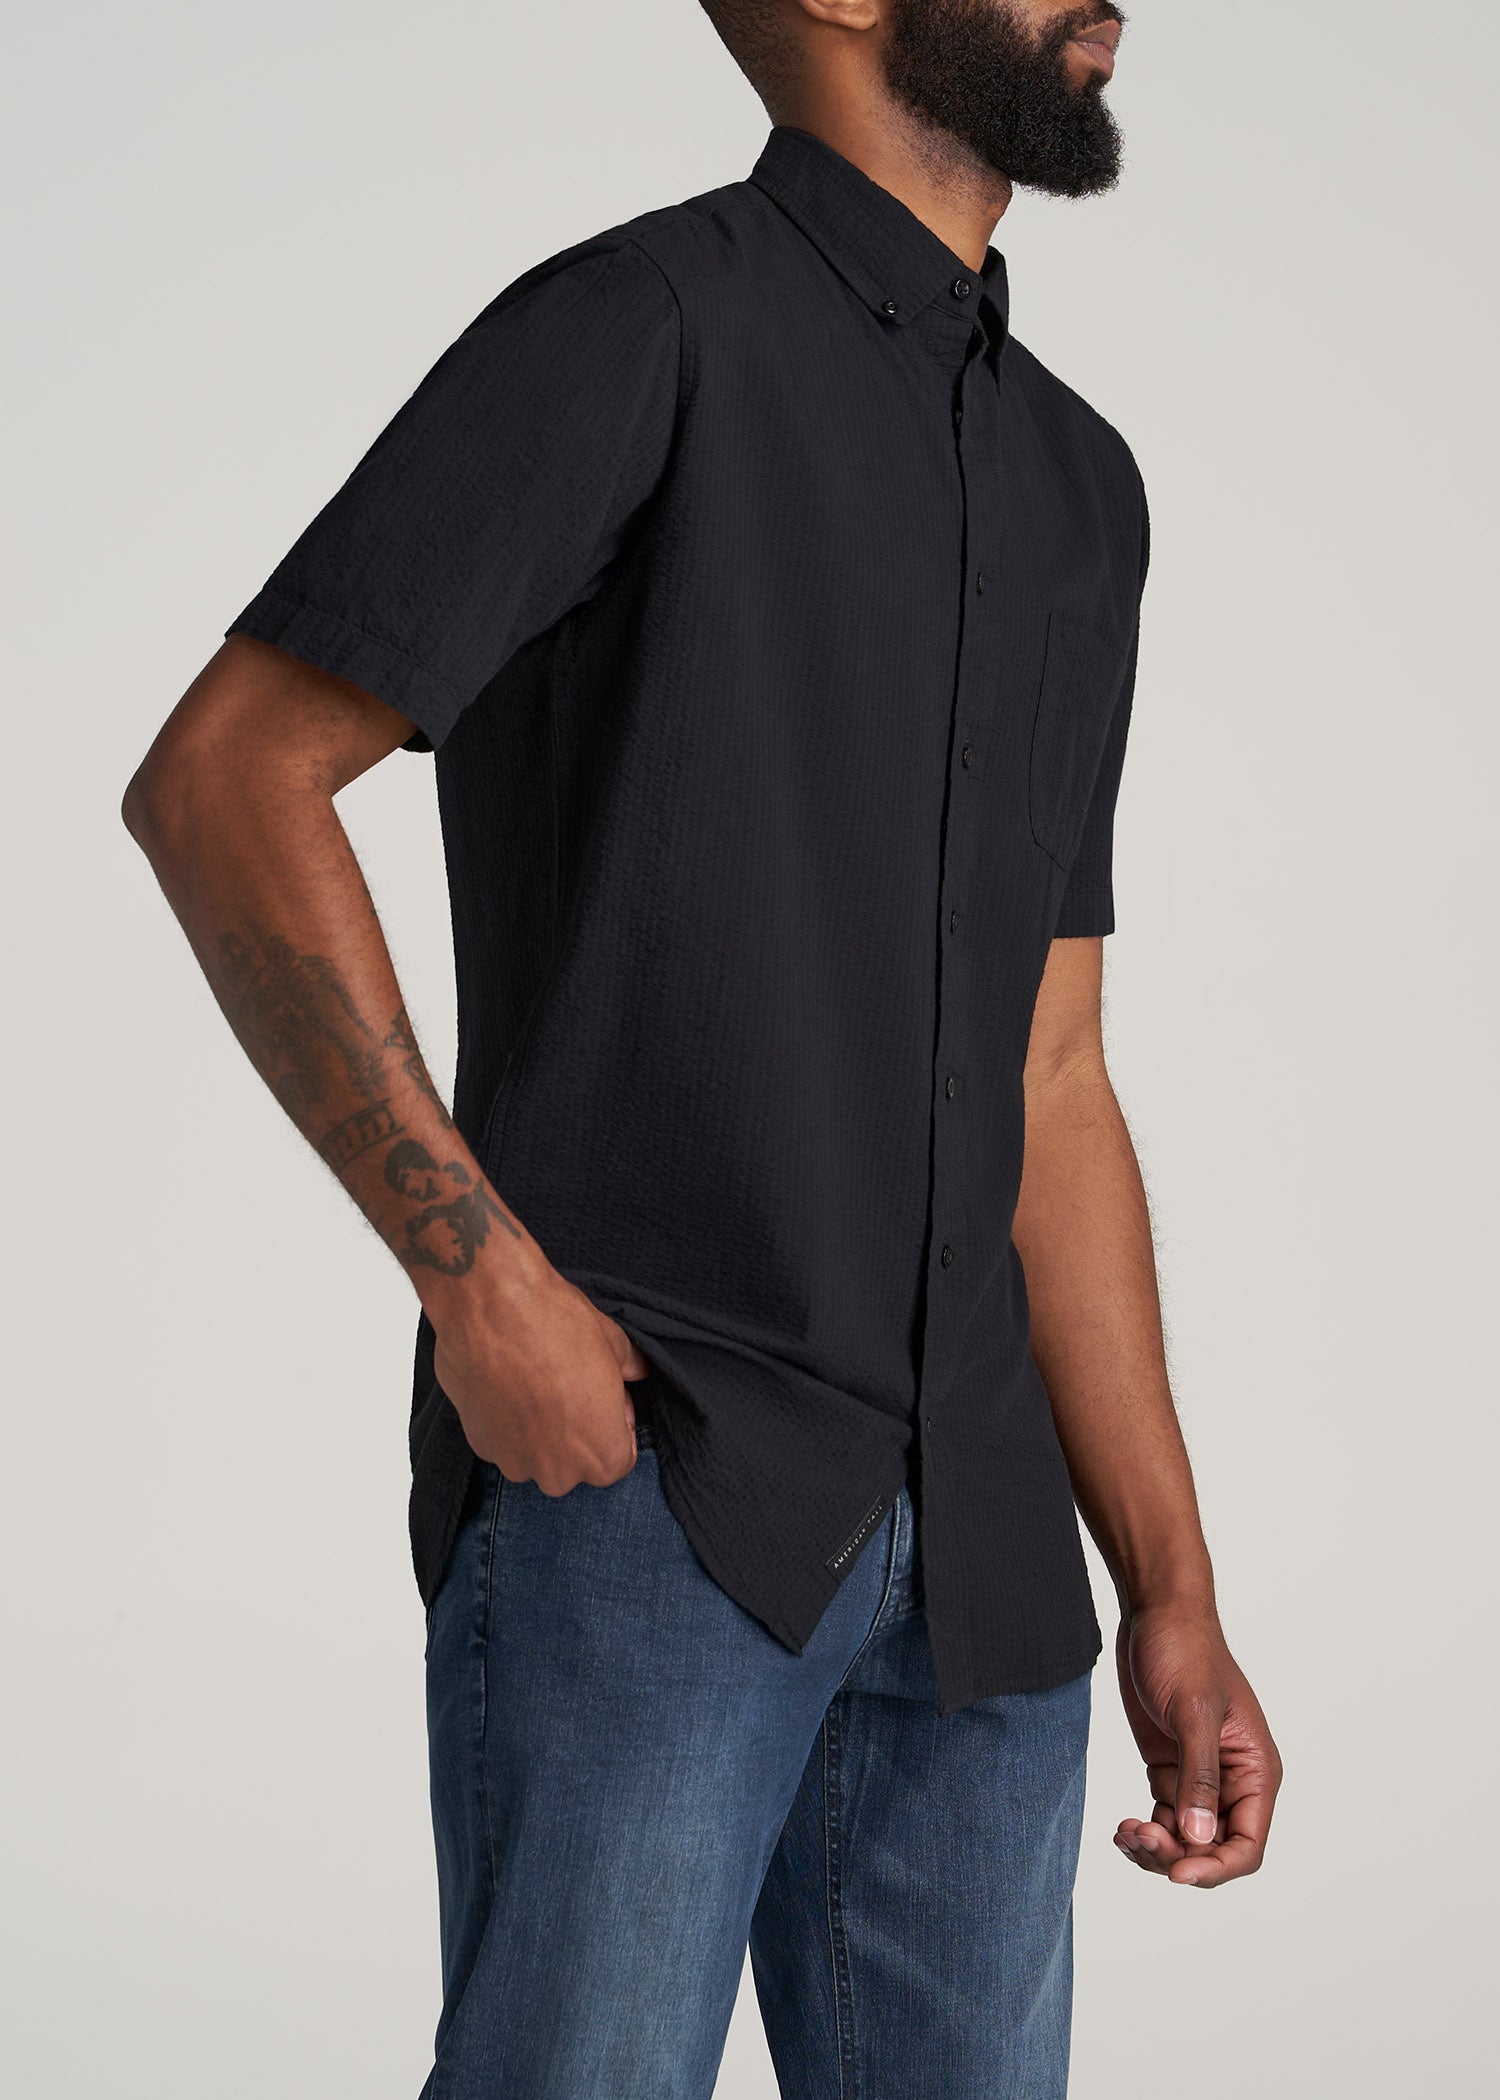 Black Seersucker Shirt: Tall Men Short Sleeve Black Shirt – American Tall